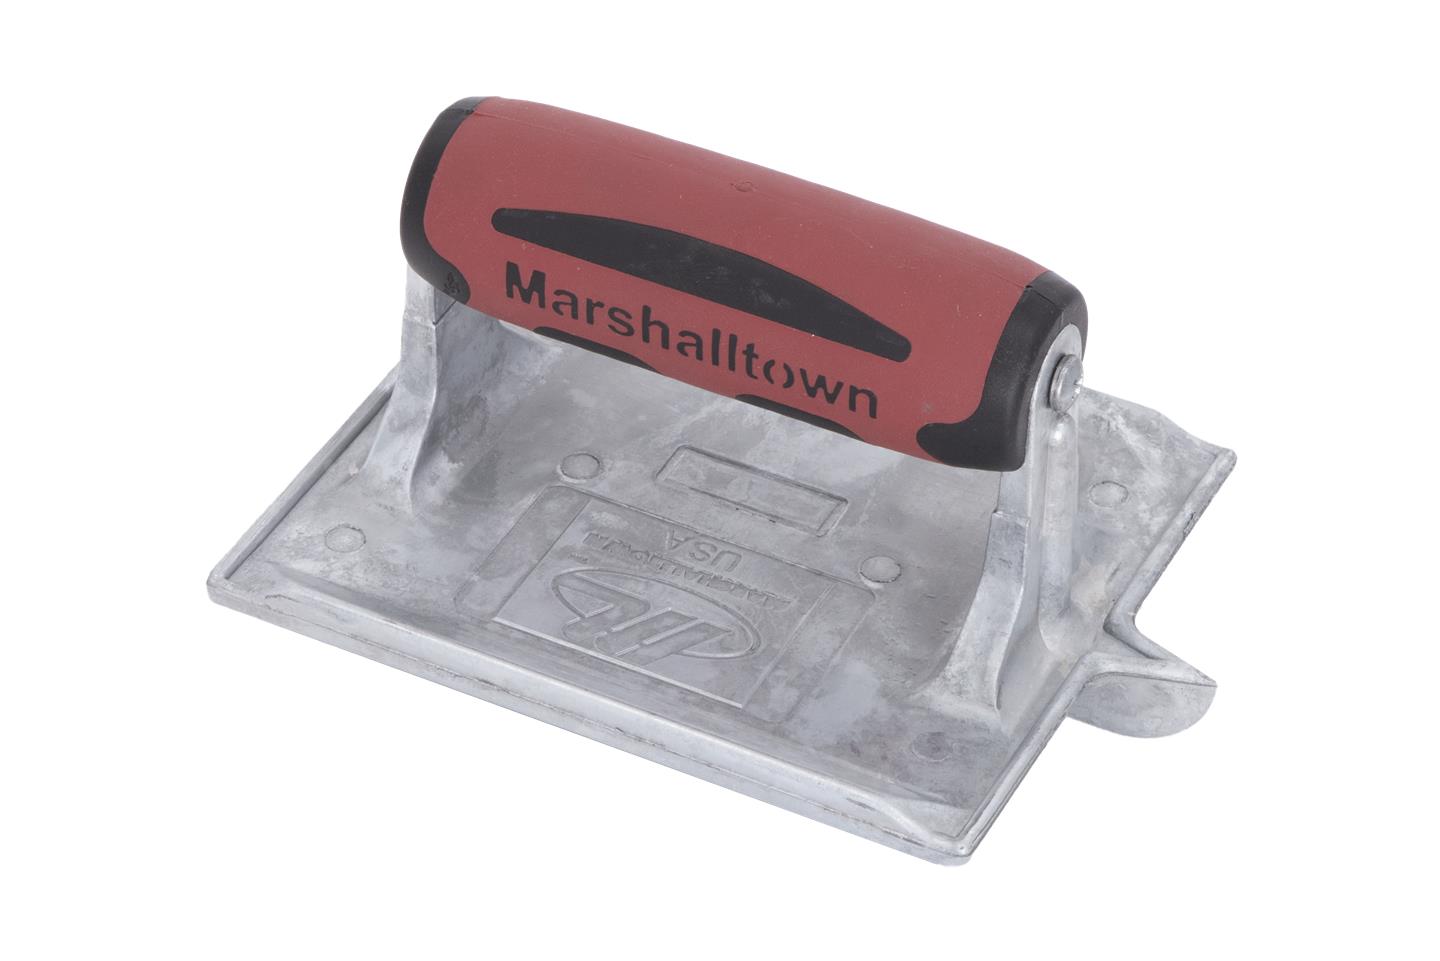 Marshalltown 14103 6 X 4 3-8 Zinc Groover; 3-4D X 5-8-DuraSoft Handle